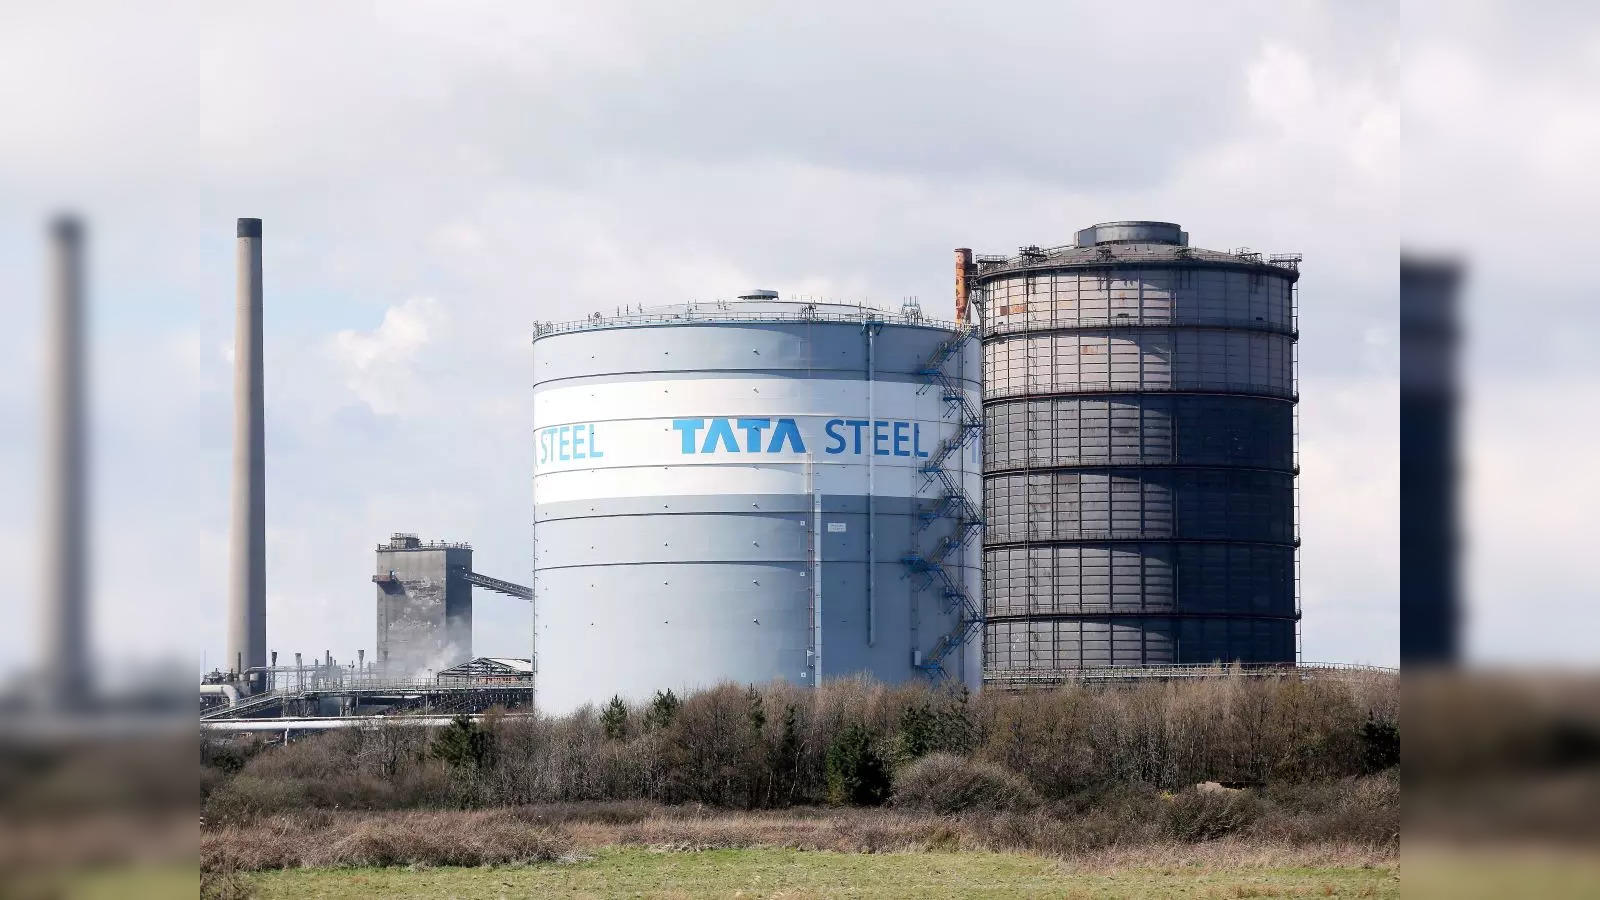 Tata Steel Recruitment 2023: Internal Sales Executive Vacancy